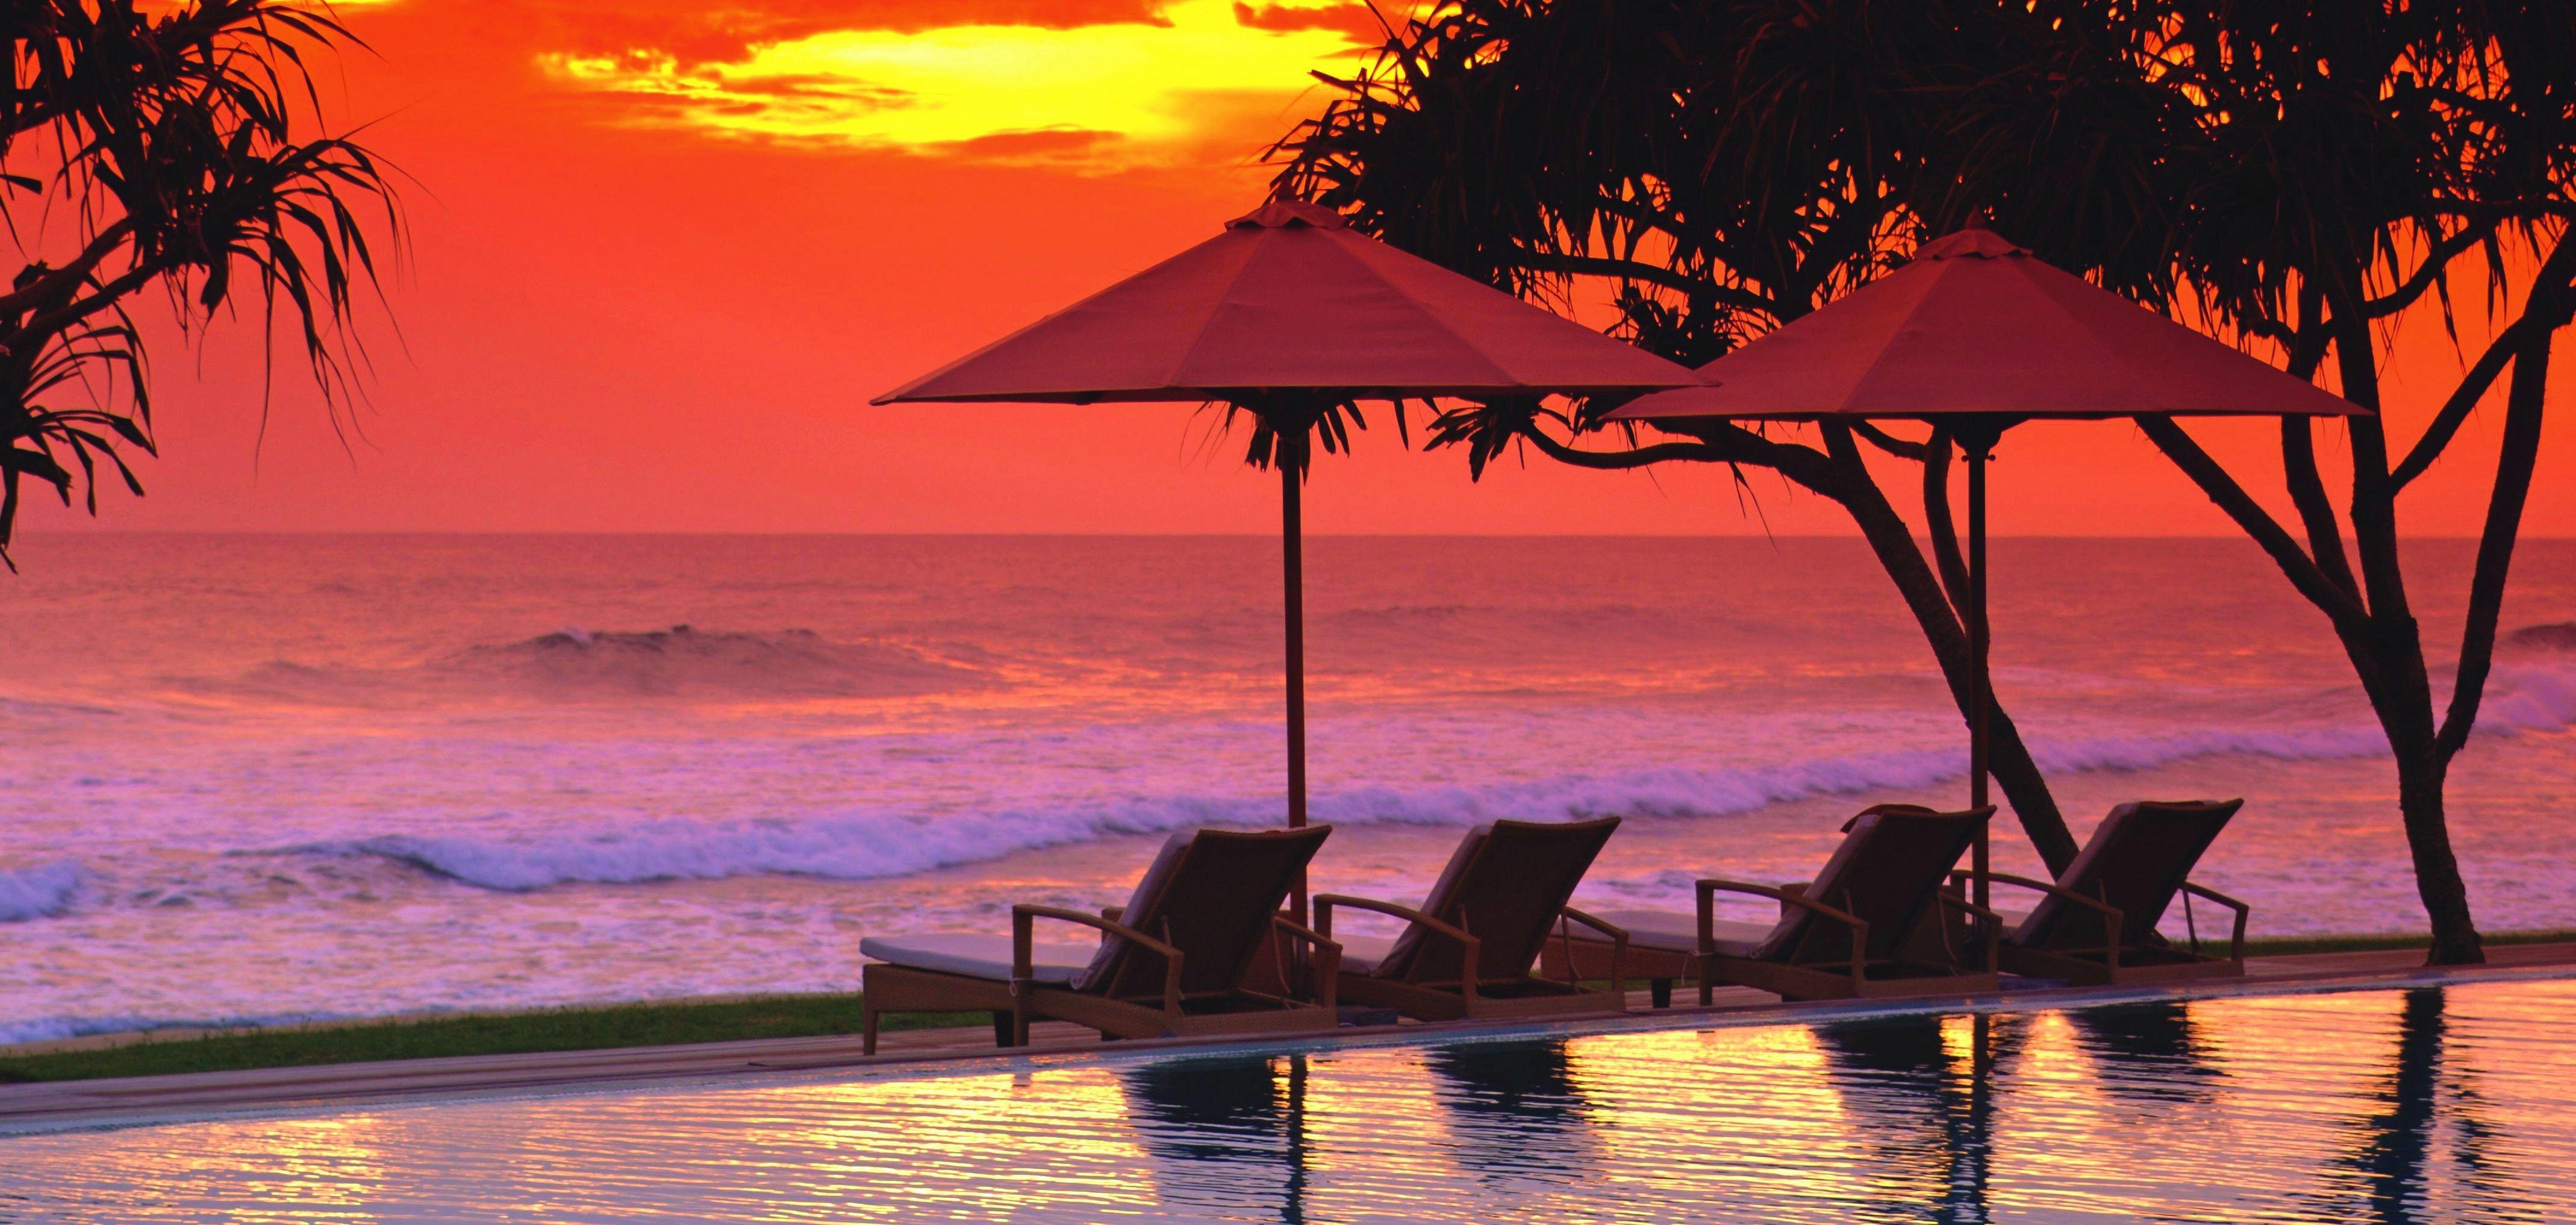 Sunsets: Tropical Sunset Sun Umbrellas Sky Chairs Beach Sea Tree